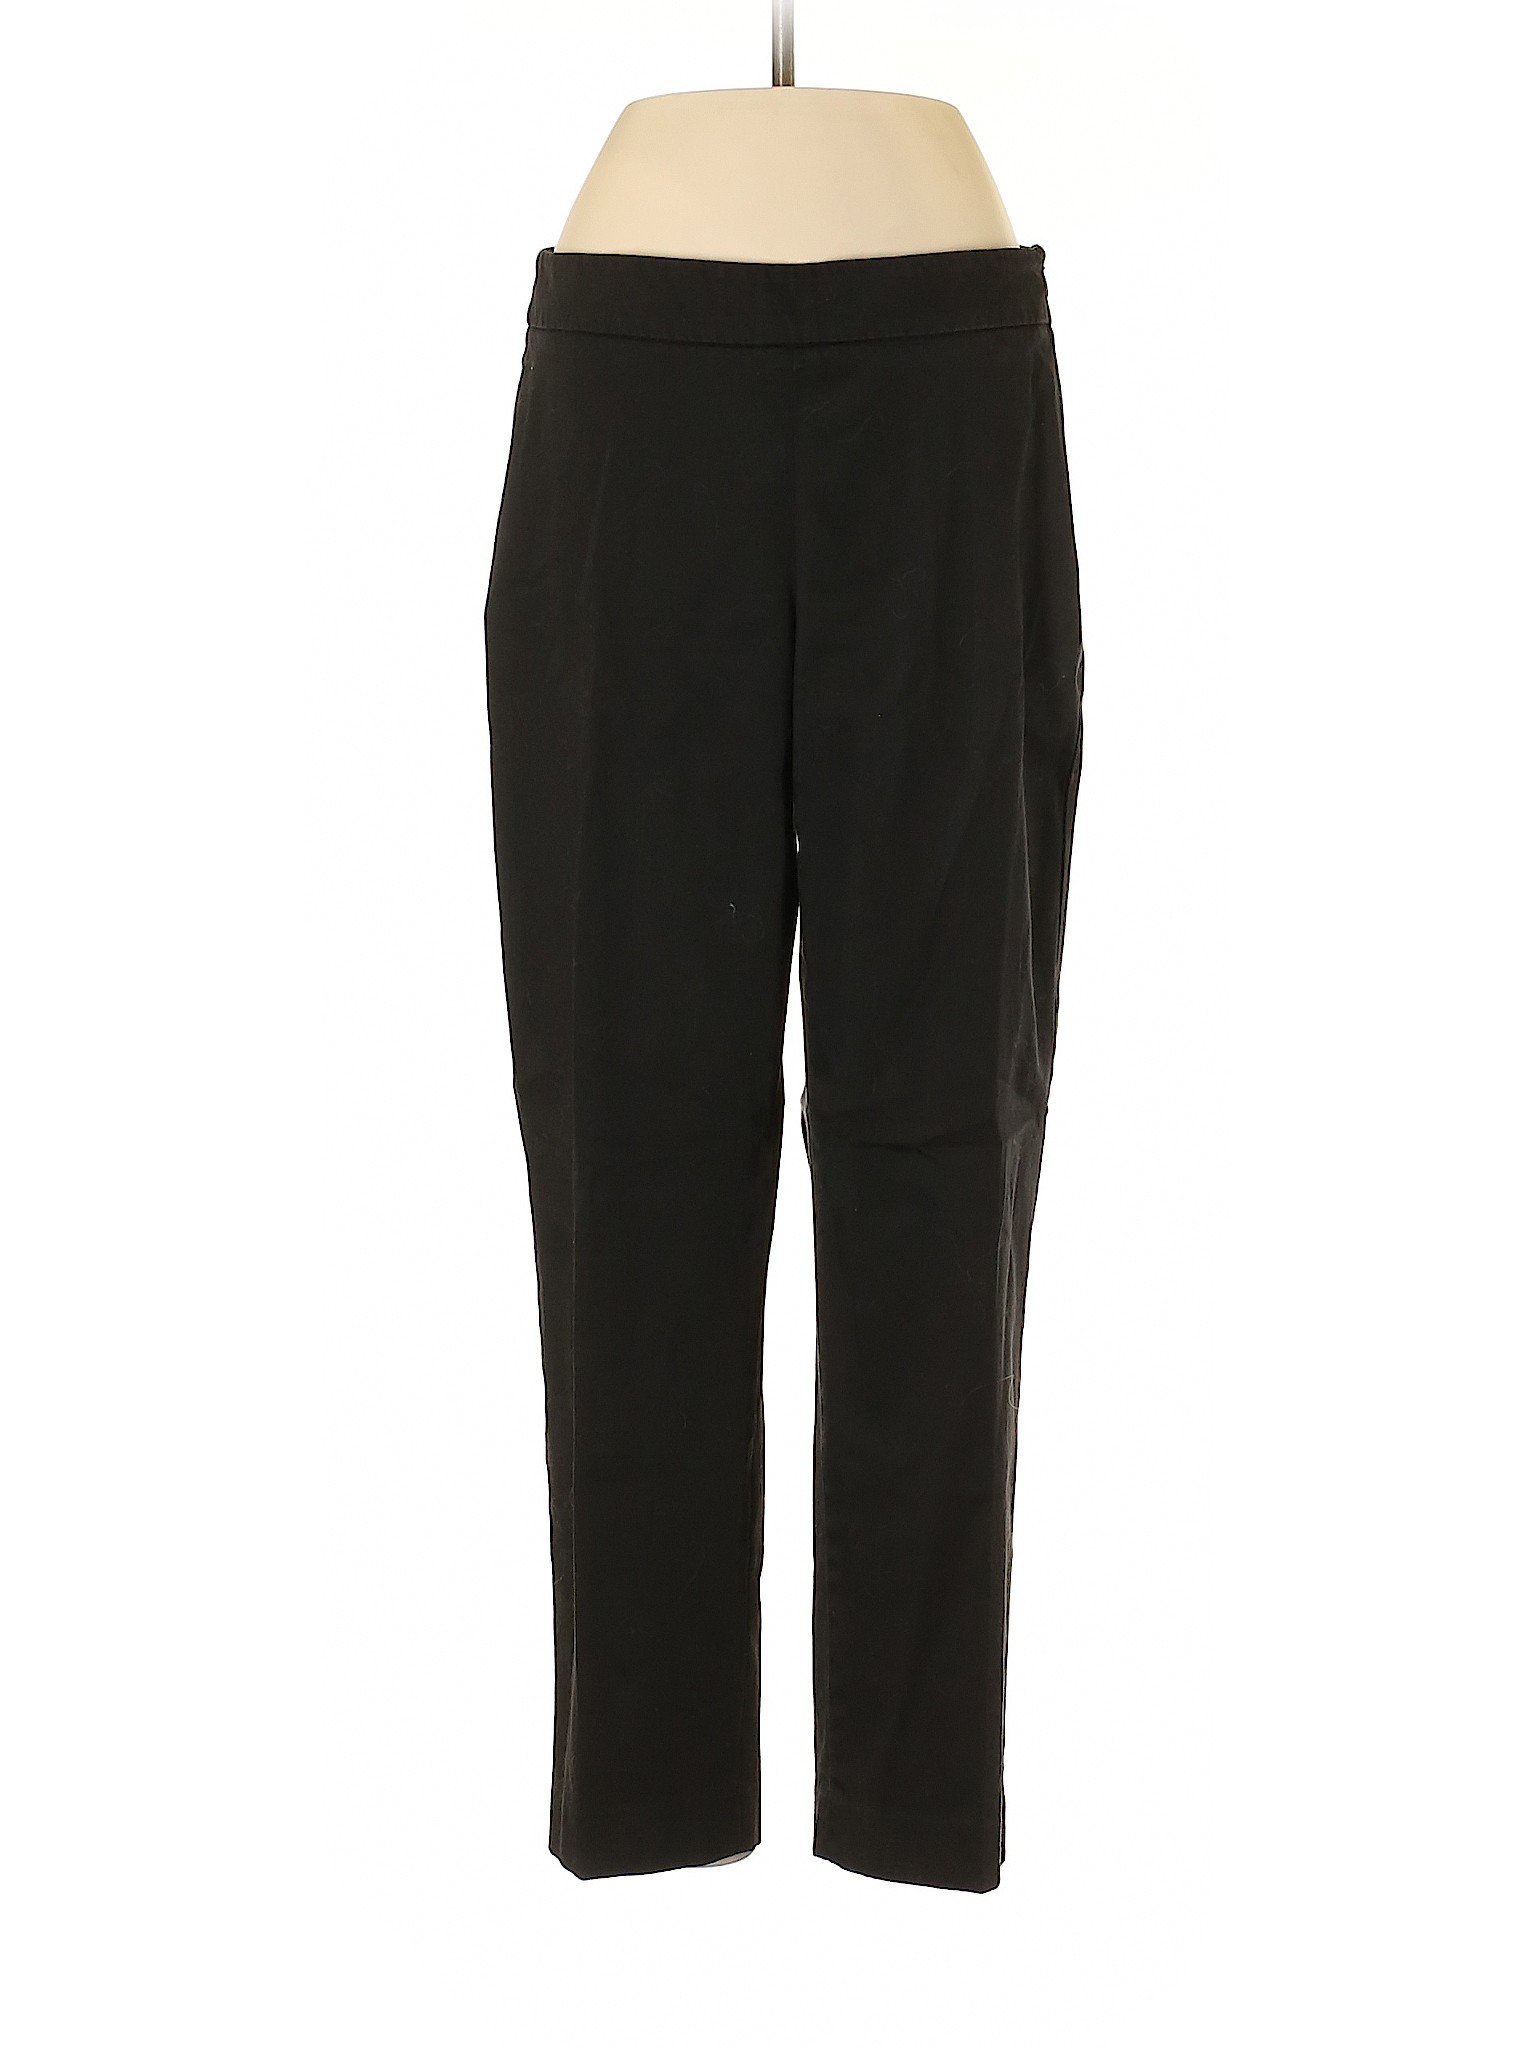 Talbots Women Black Dress Pants 2 | eBay